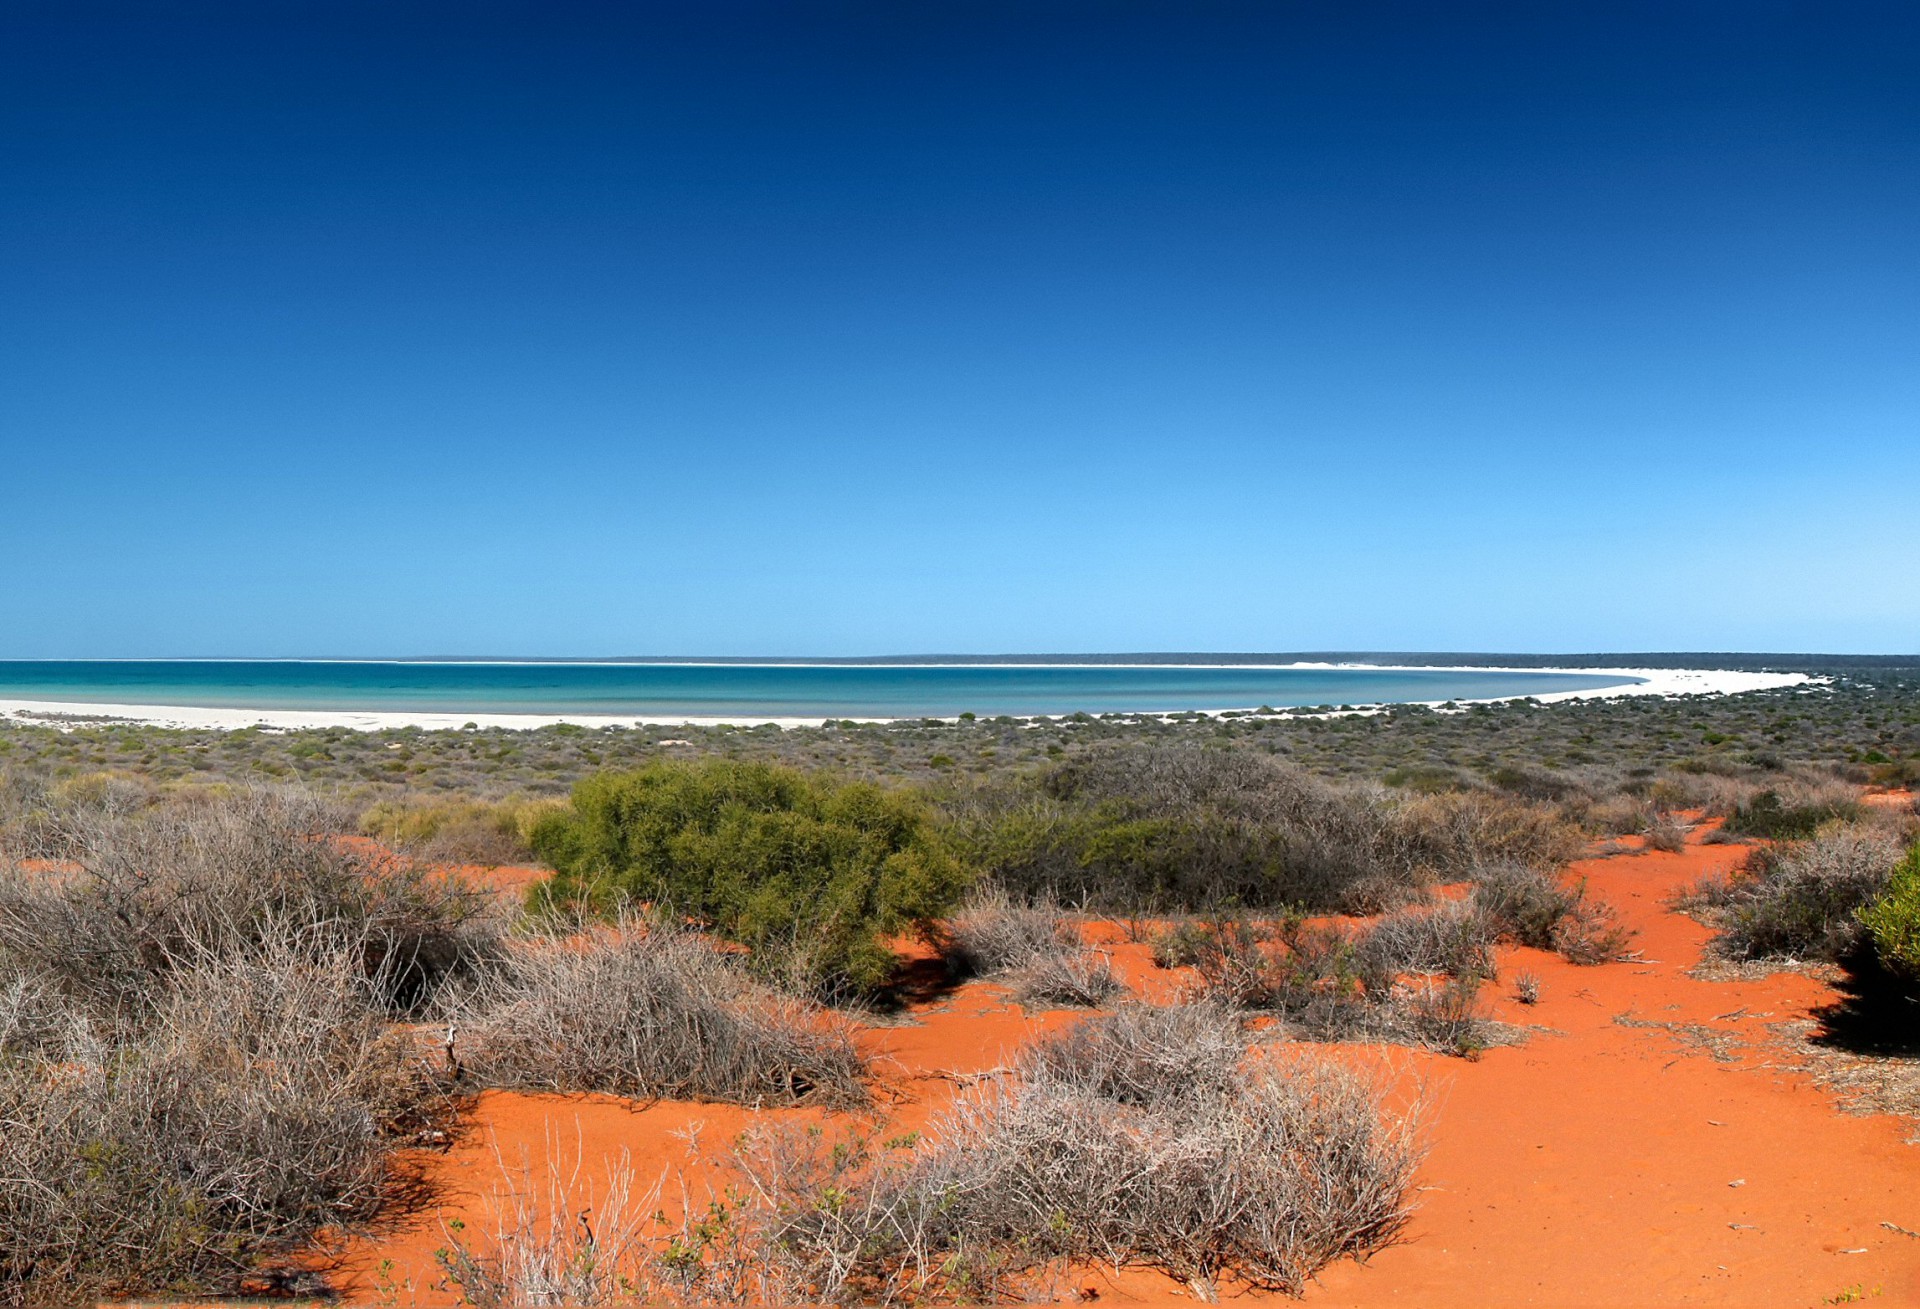 The Pilbara Western Australia